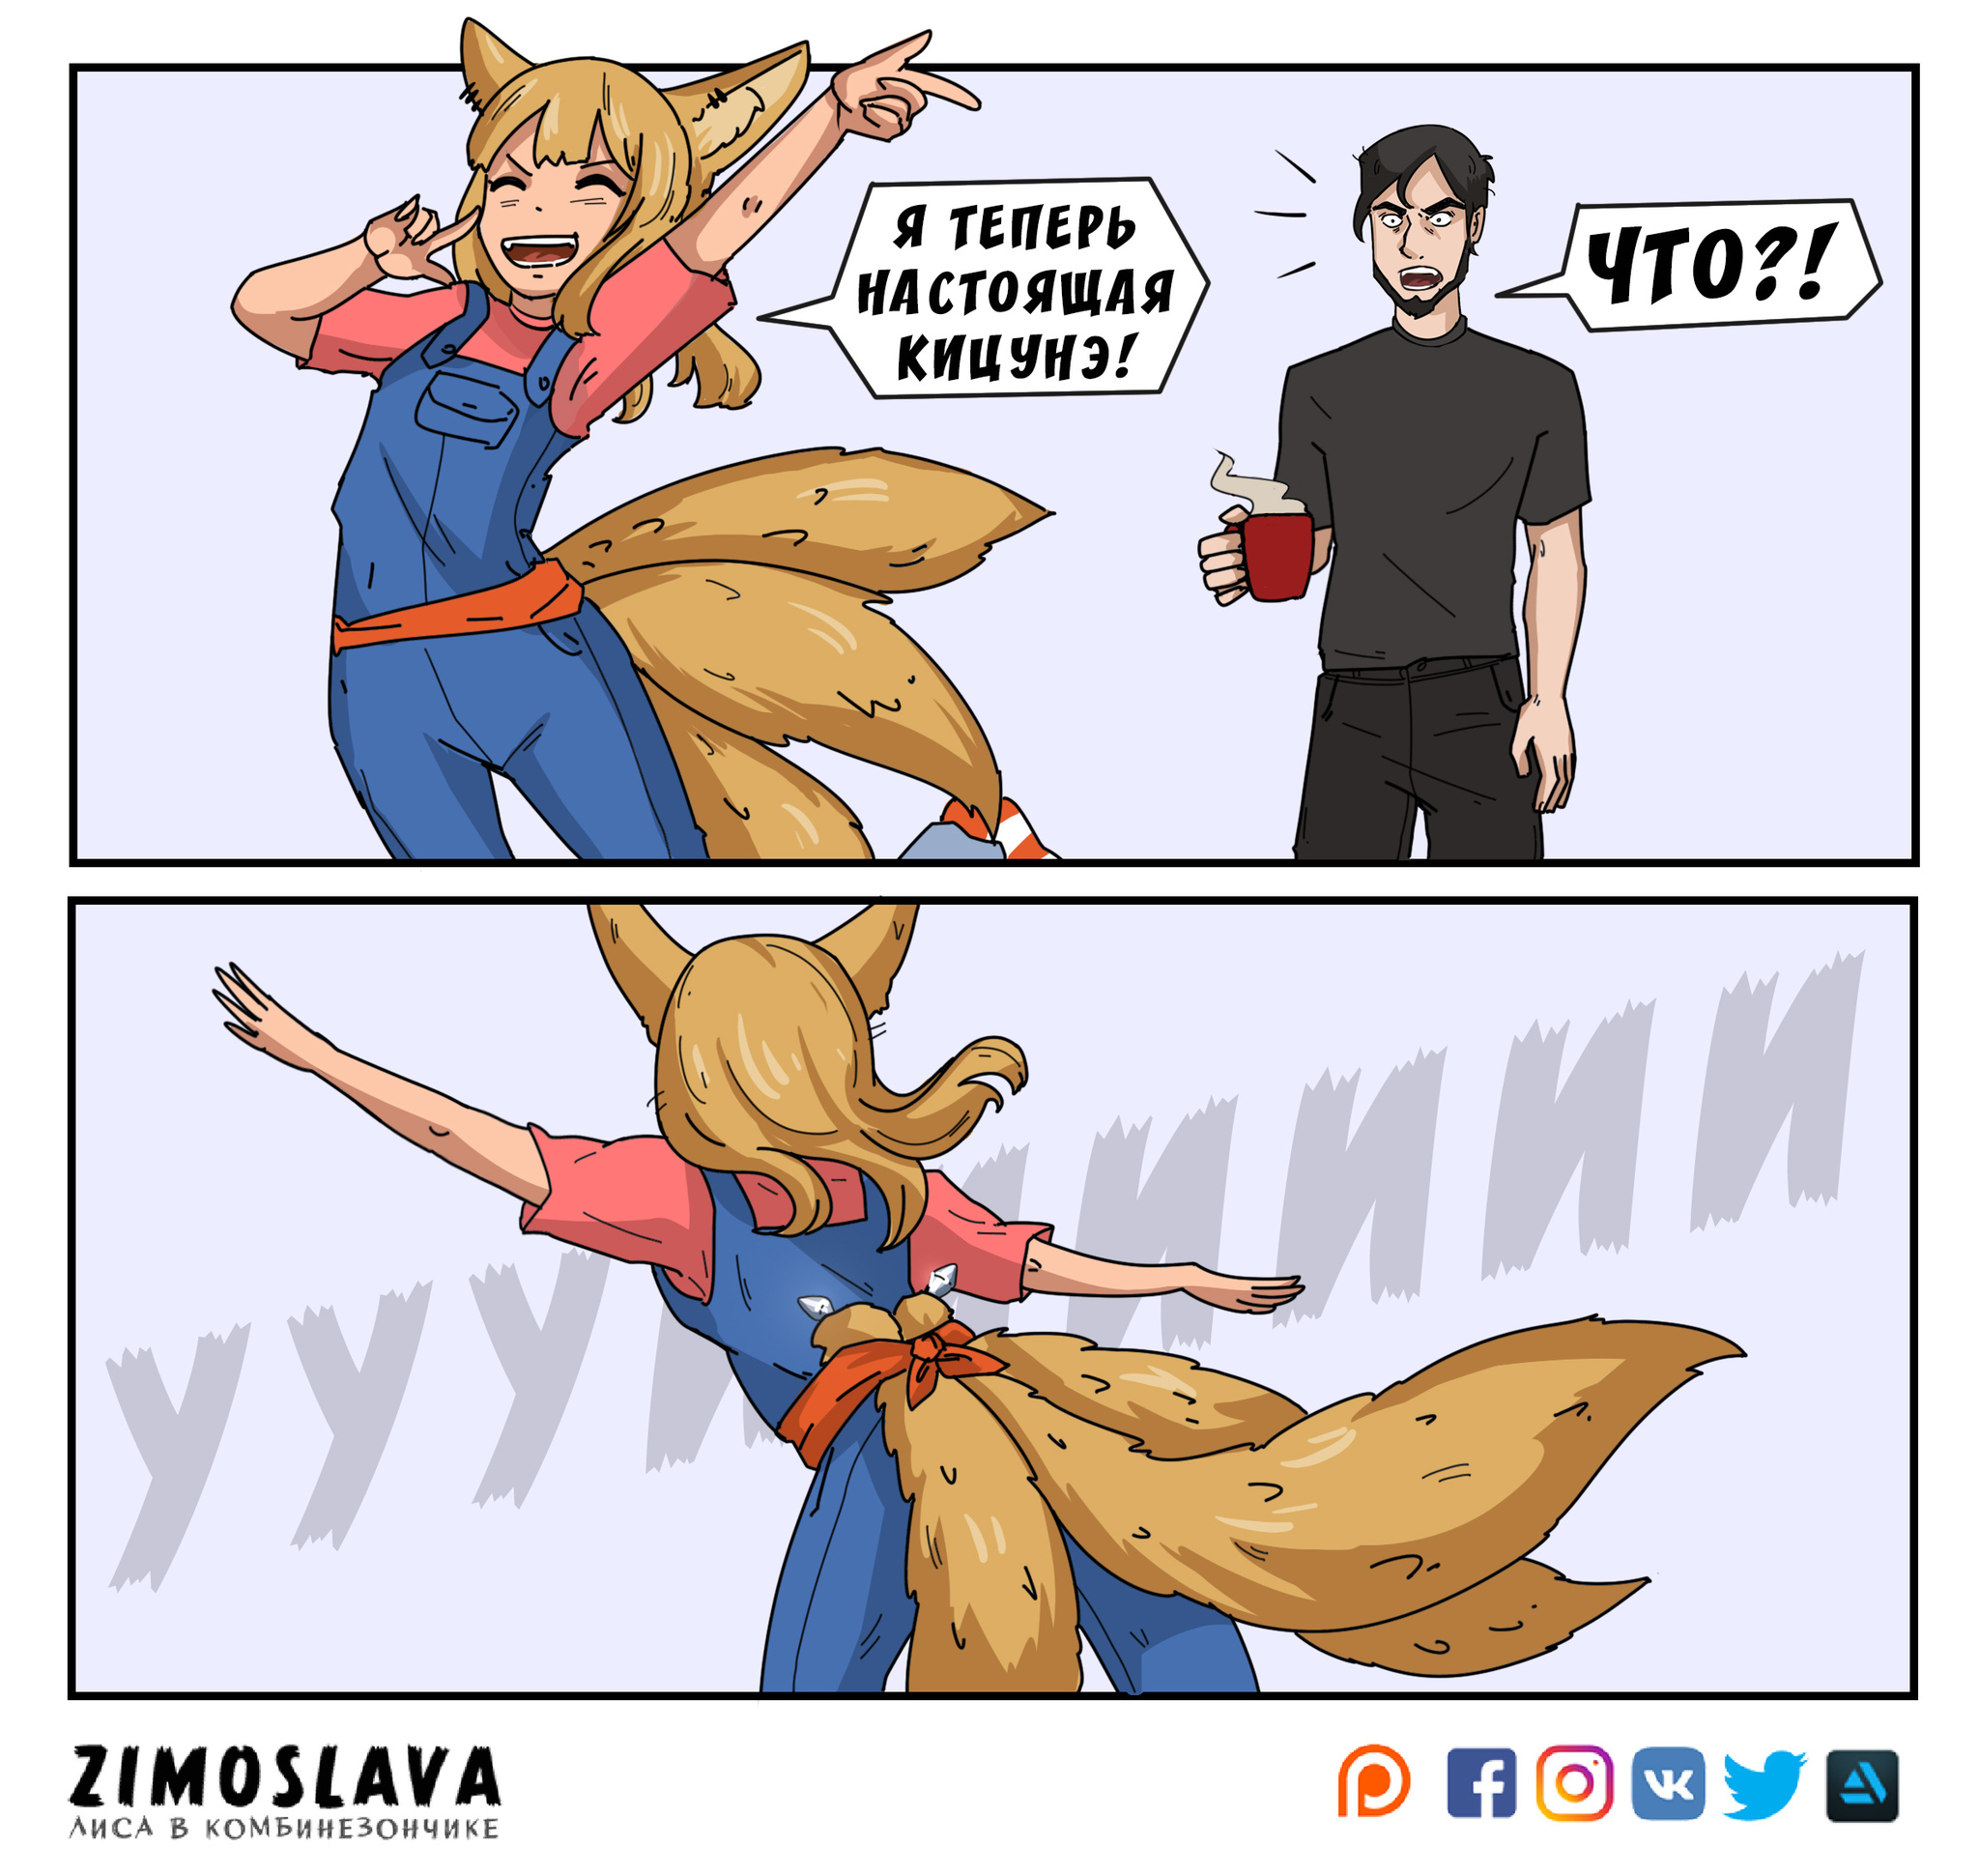 Zimoslava artist комикс